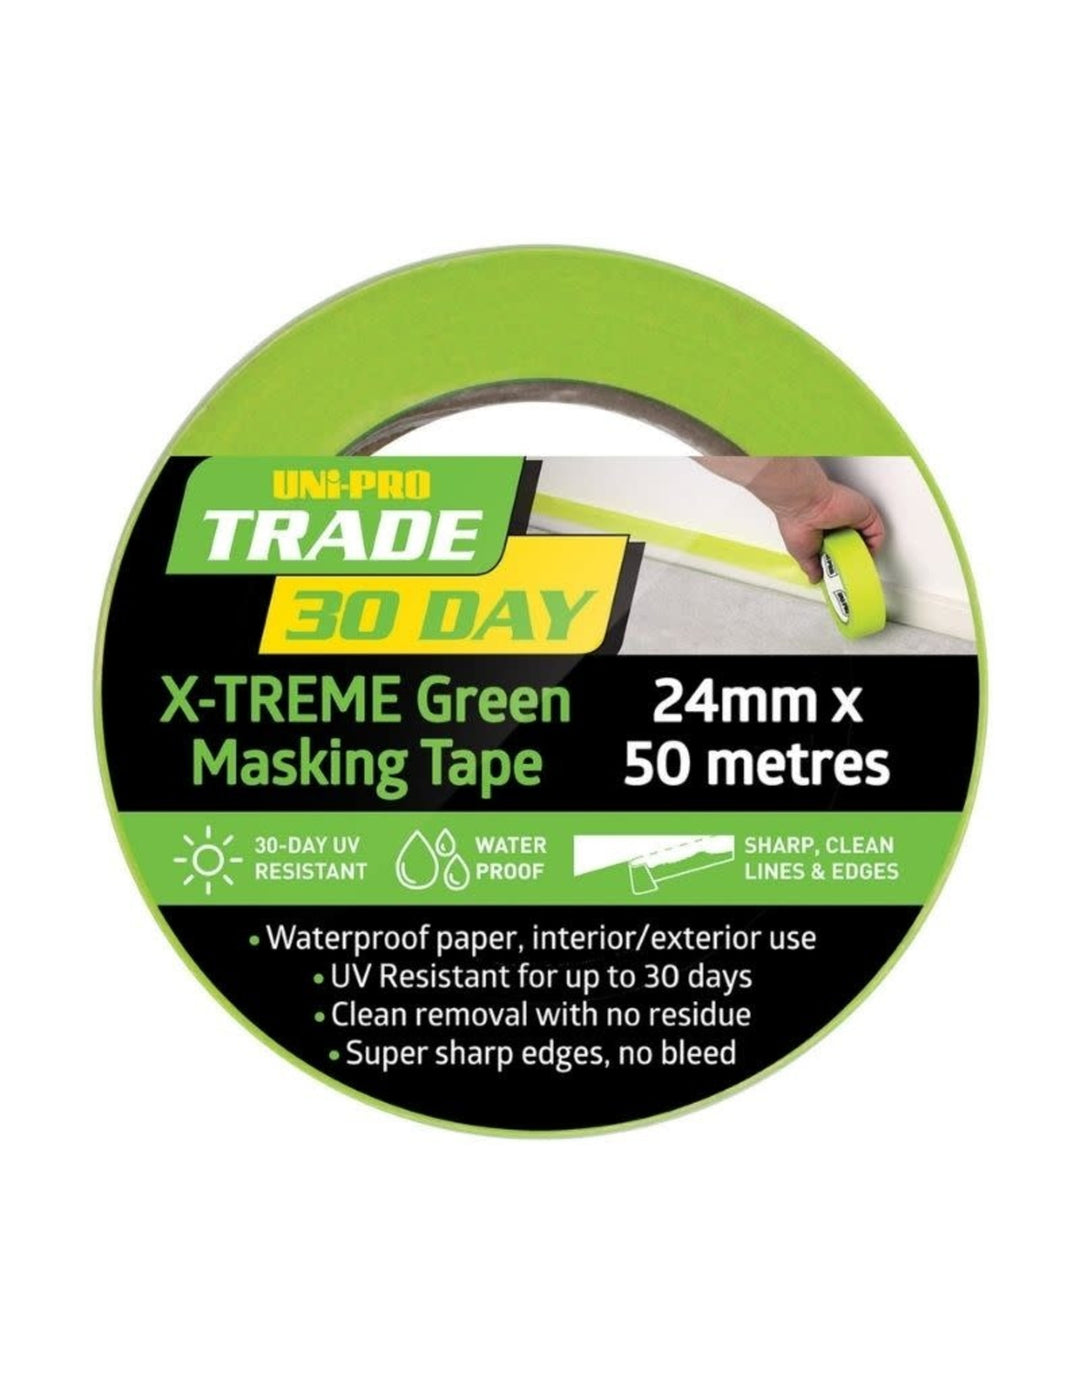 UNi-PRO Trade 30 Day X-TREME Green Masking Tape 24mm x 50metres - Rustic Farmhouse Charm